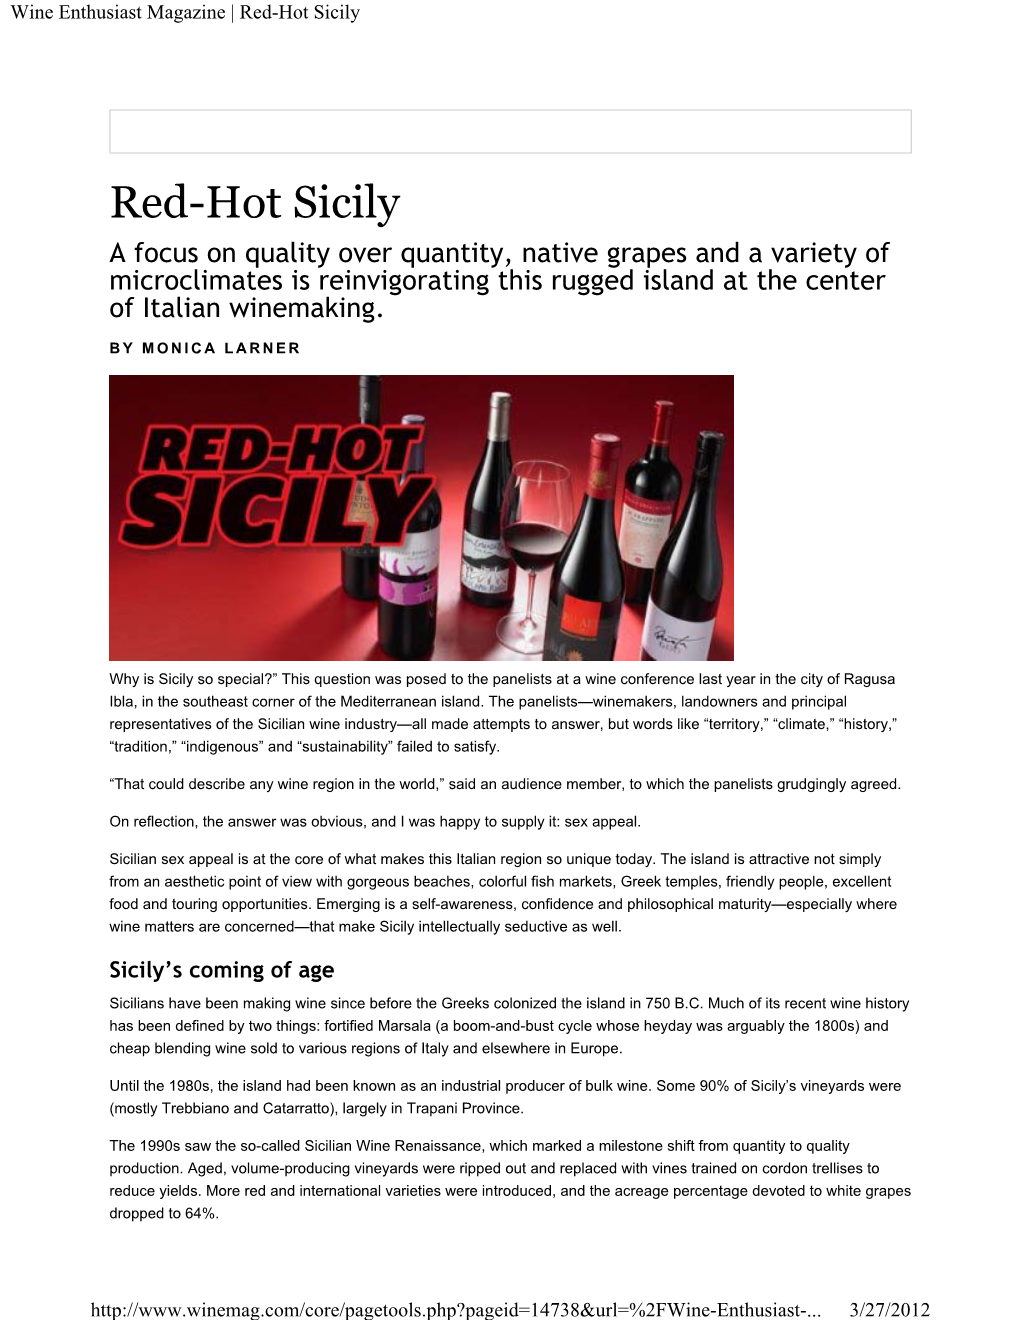 Red-Hot Sicily